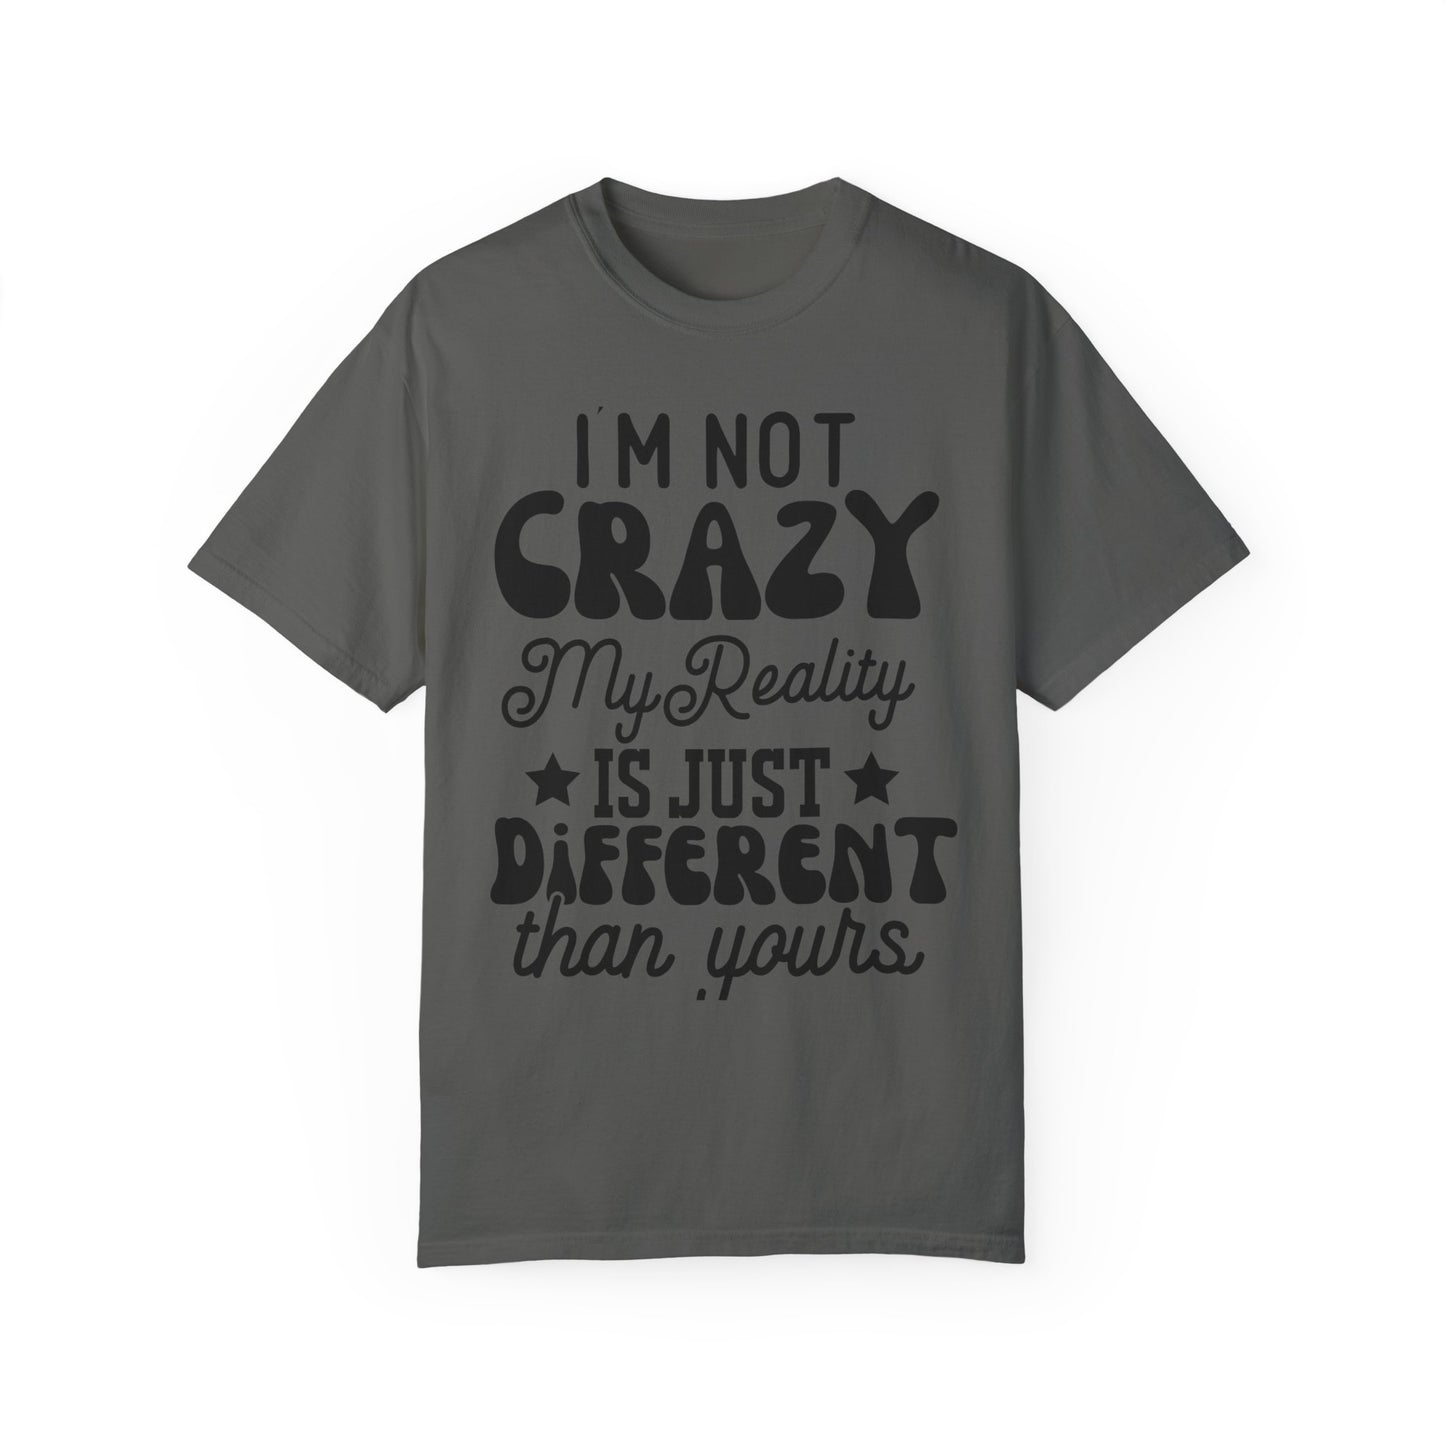 I'm not crazy - Unisex Garment-Dyed T-shirt